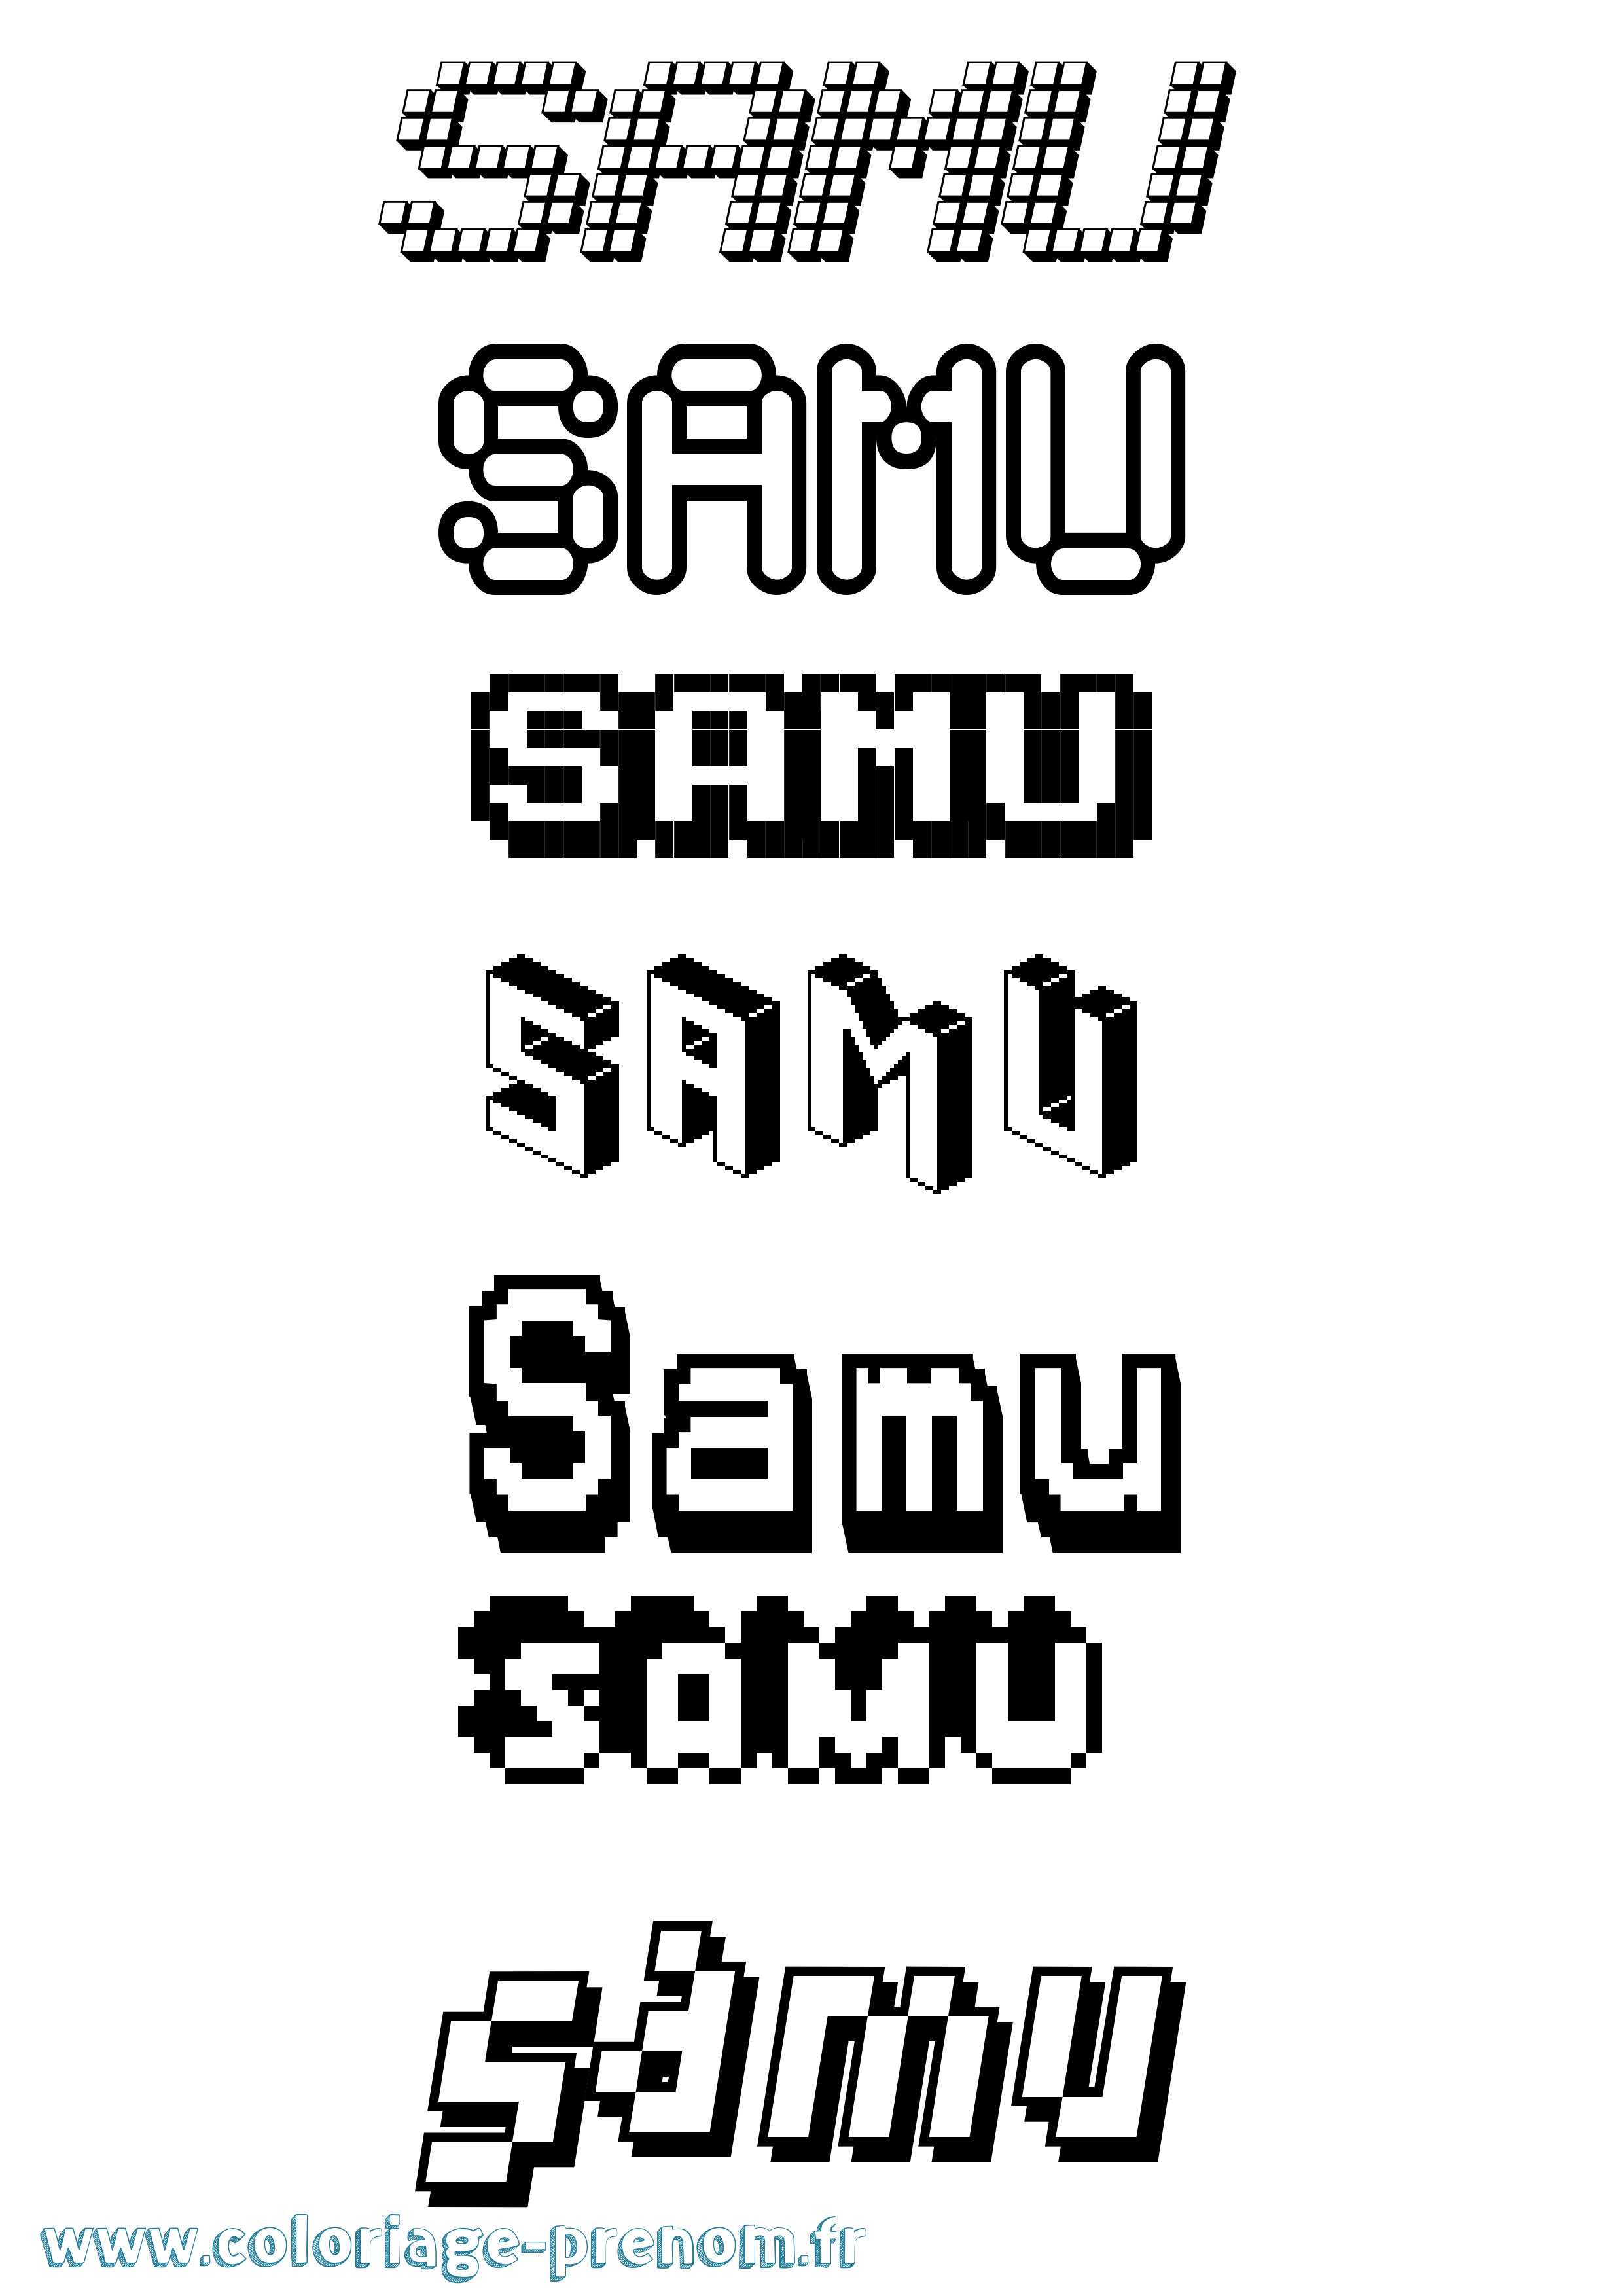 Coloriage prénom Samu Pixel